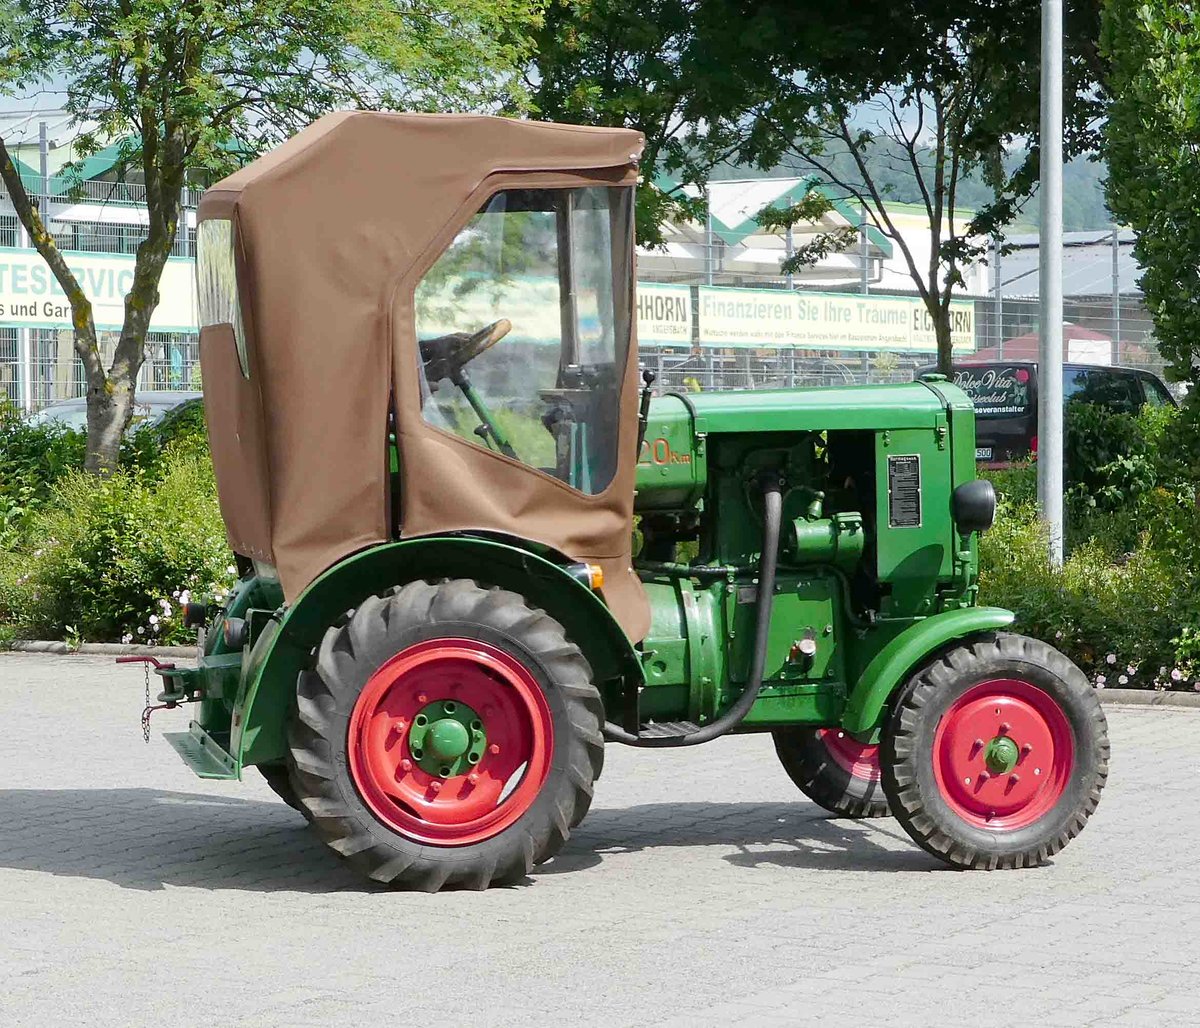 =Normag NG 22 besucht die Traktorenausstellung  Ahle Bulldogge us Angeschbach oh Lannehuse  in Angersbach im Juni 2018